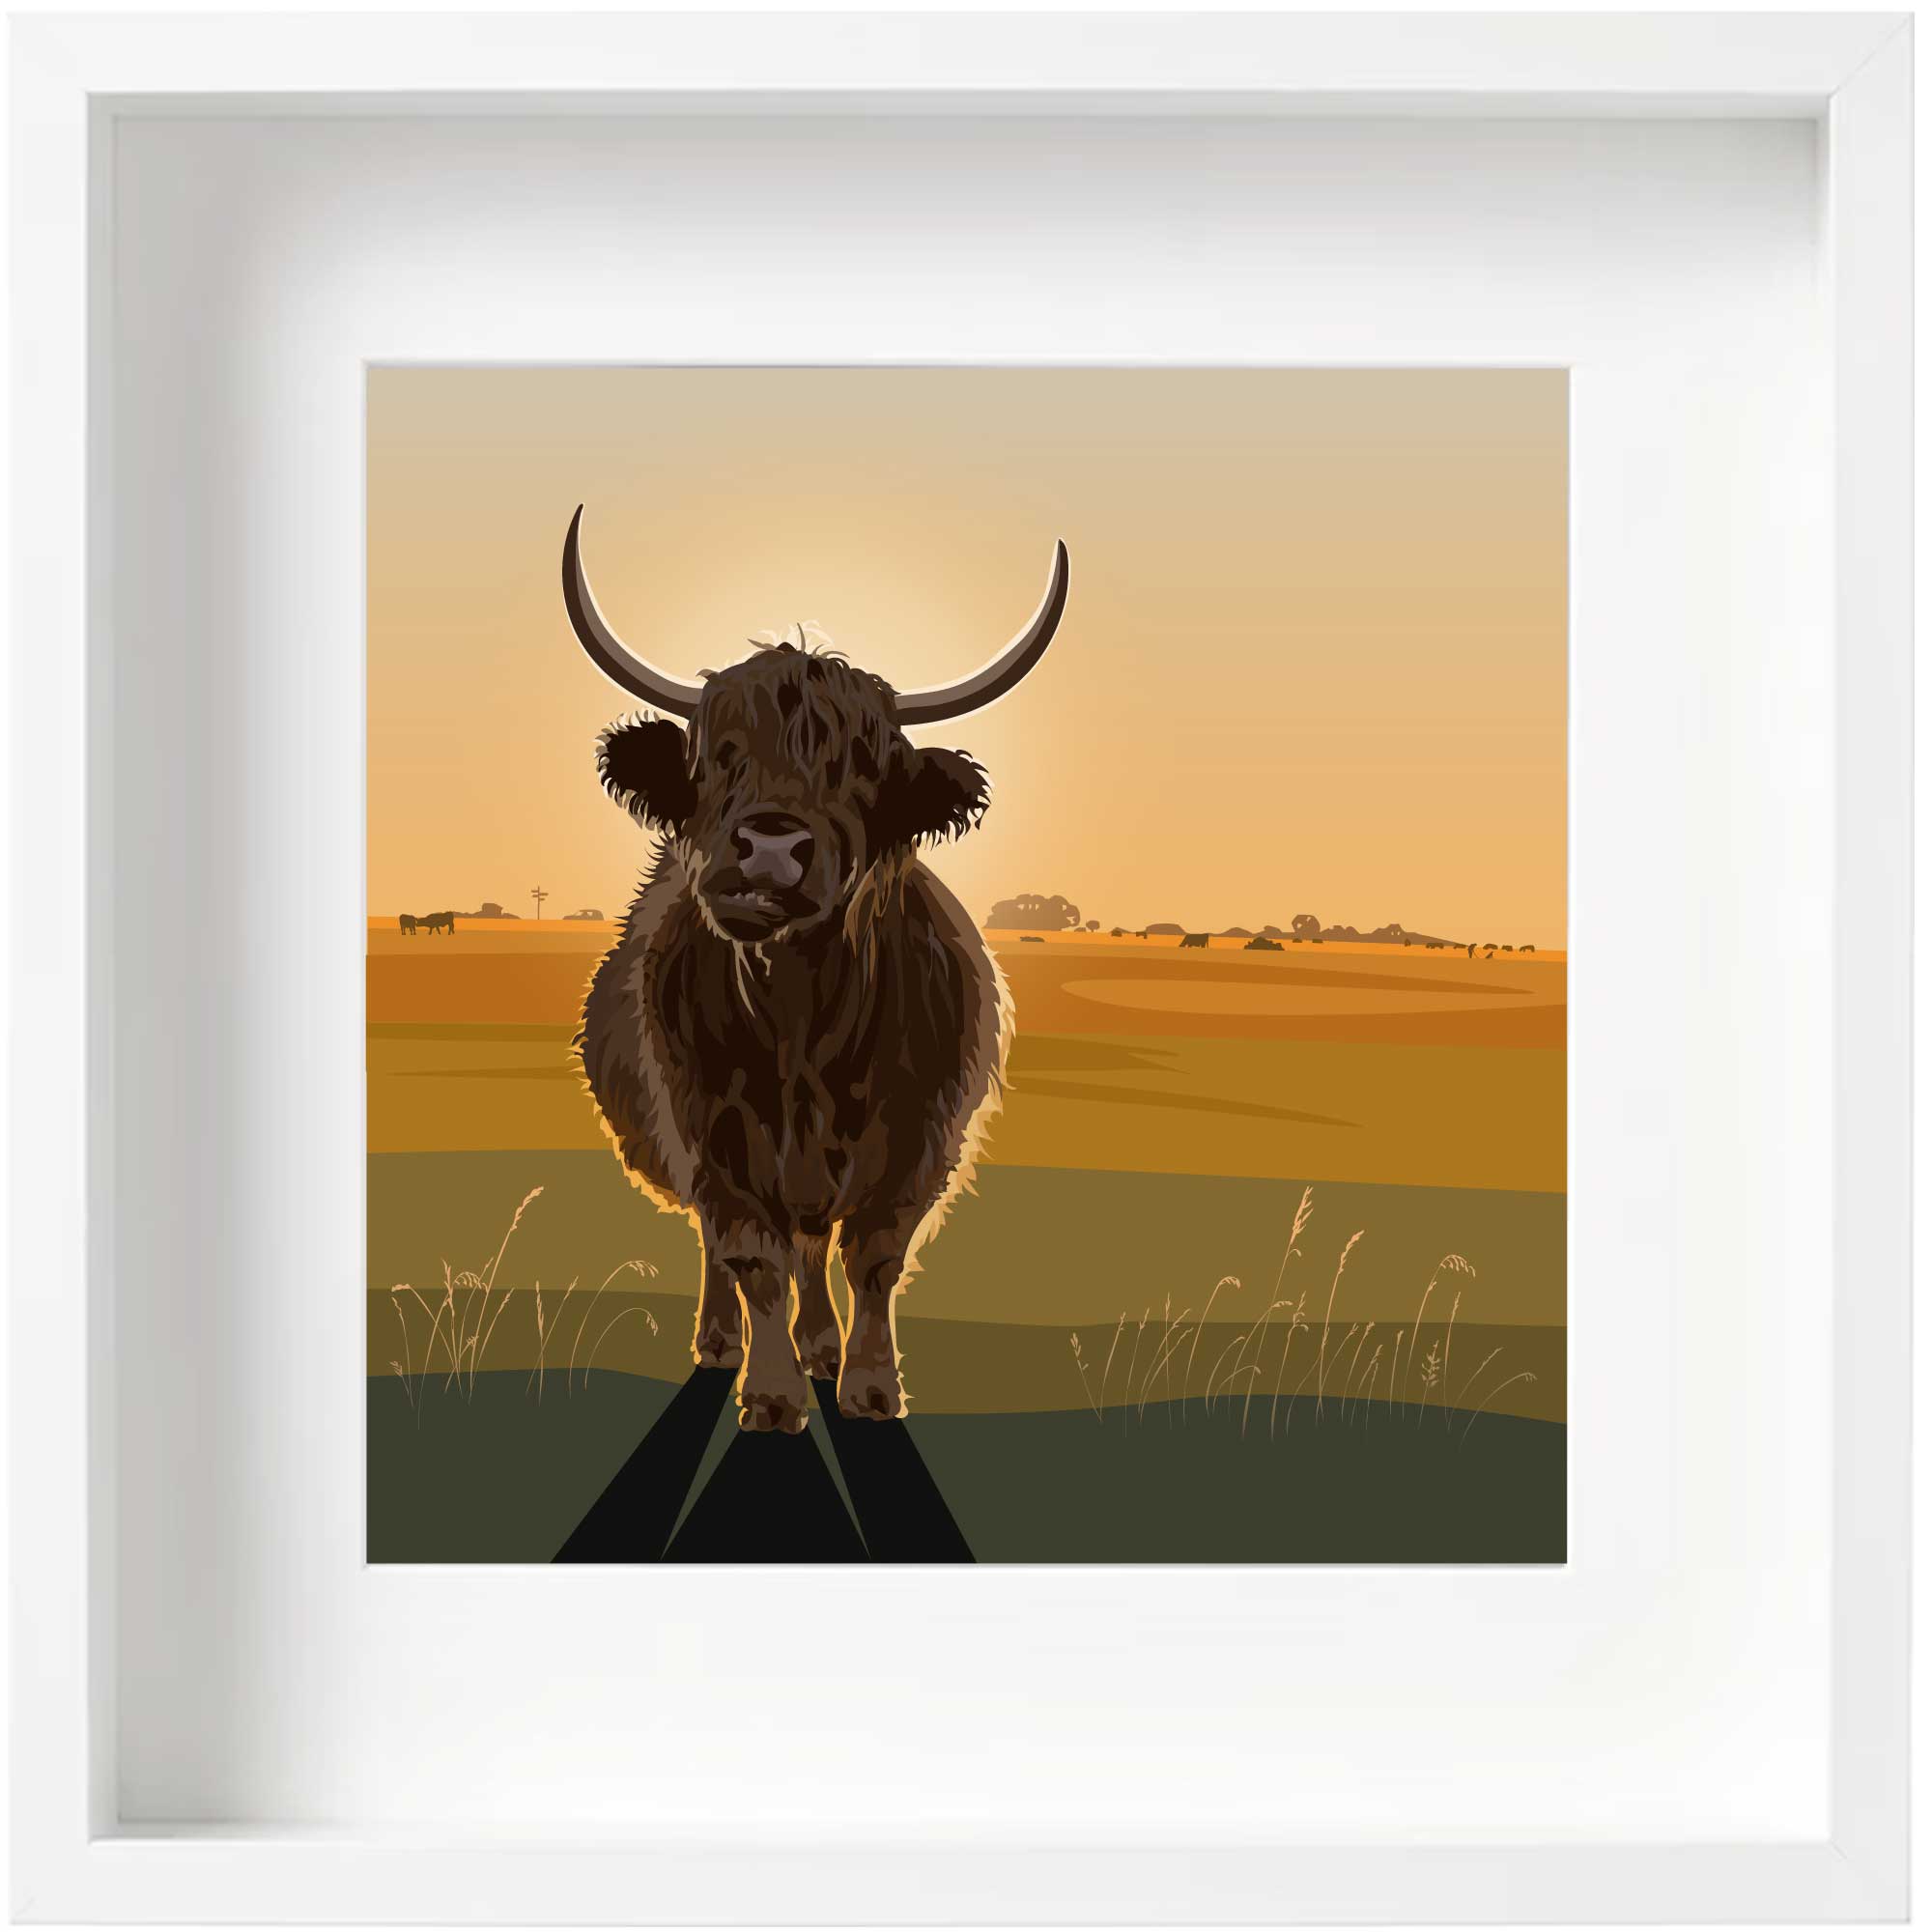 Highland Cow Sunset - Orange - Kent and Co Framed Art Print by Nichola Kent